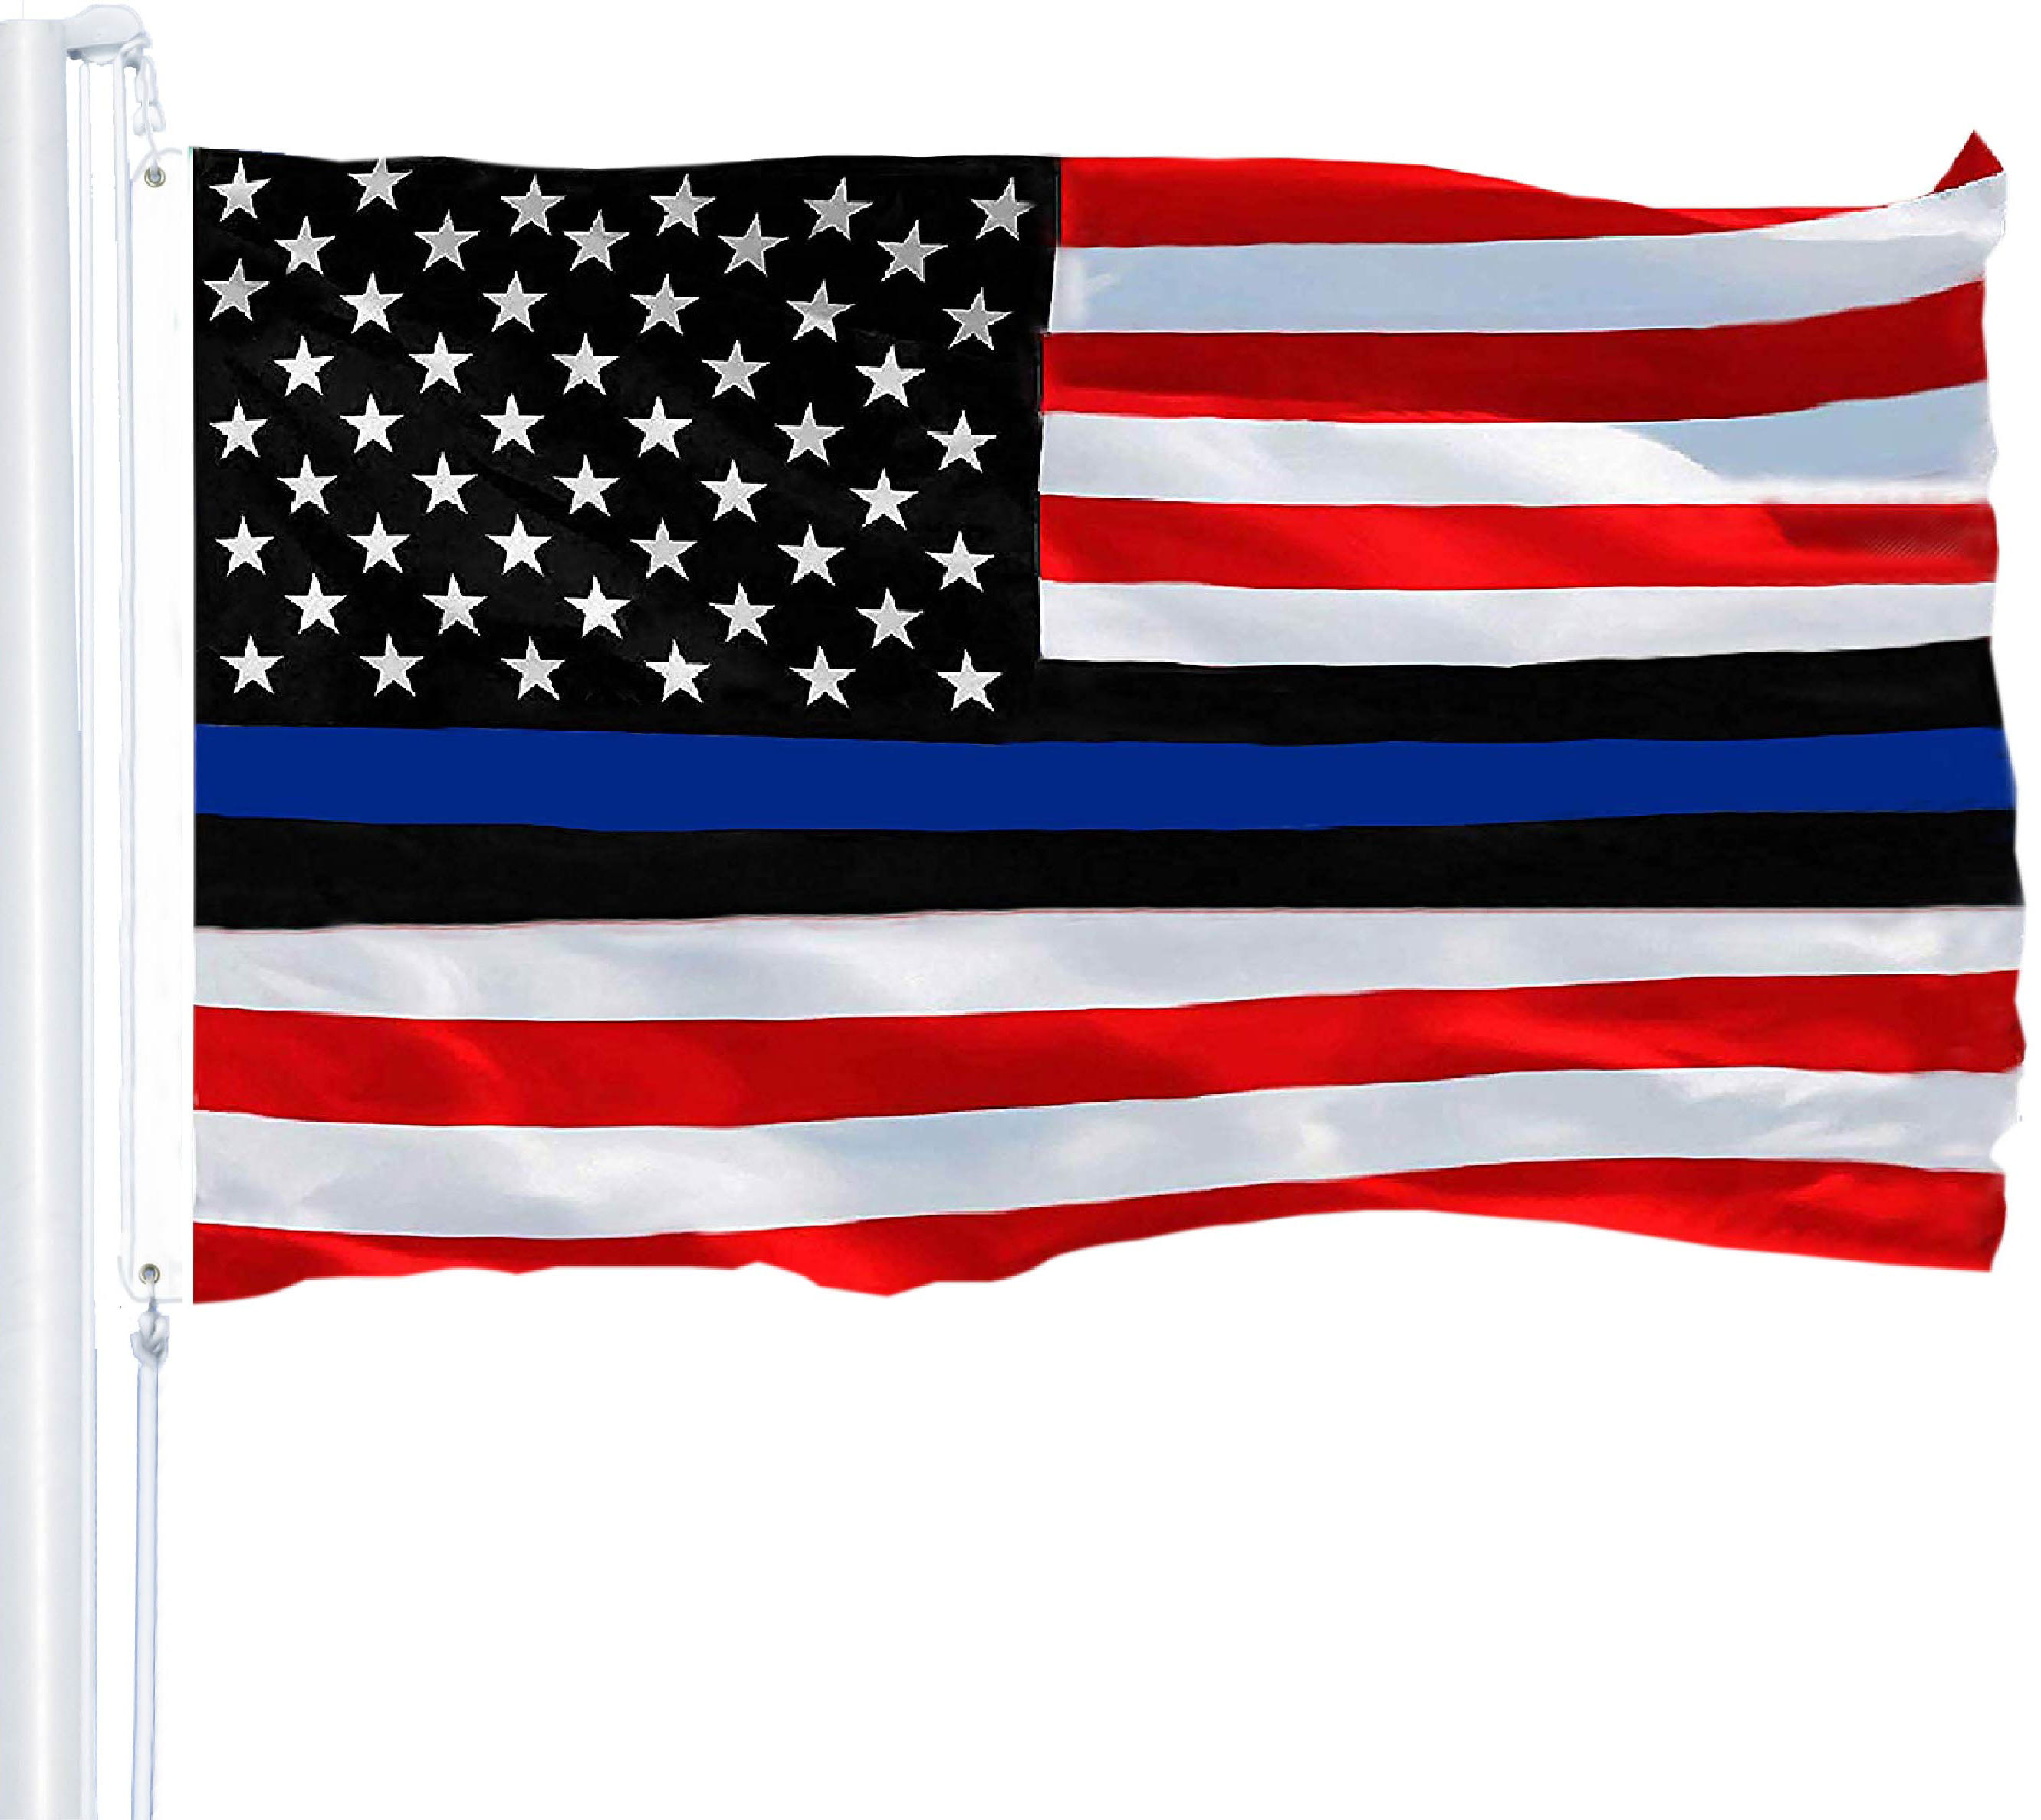 Police Blue Lives Matter Flag 3 x 5 NEW